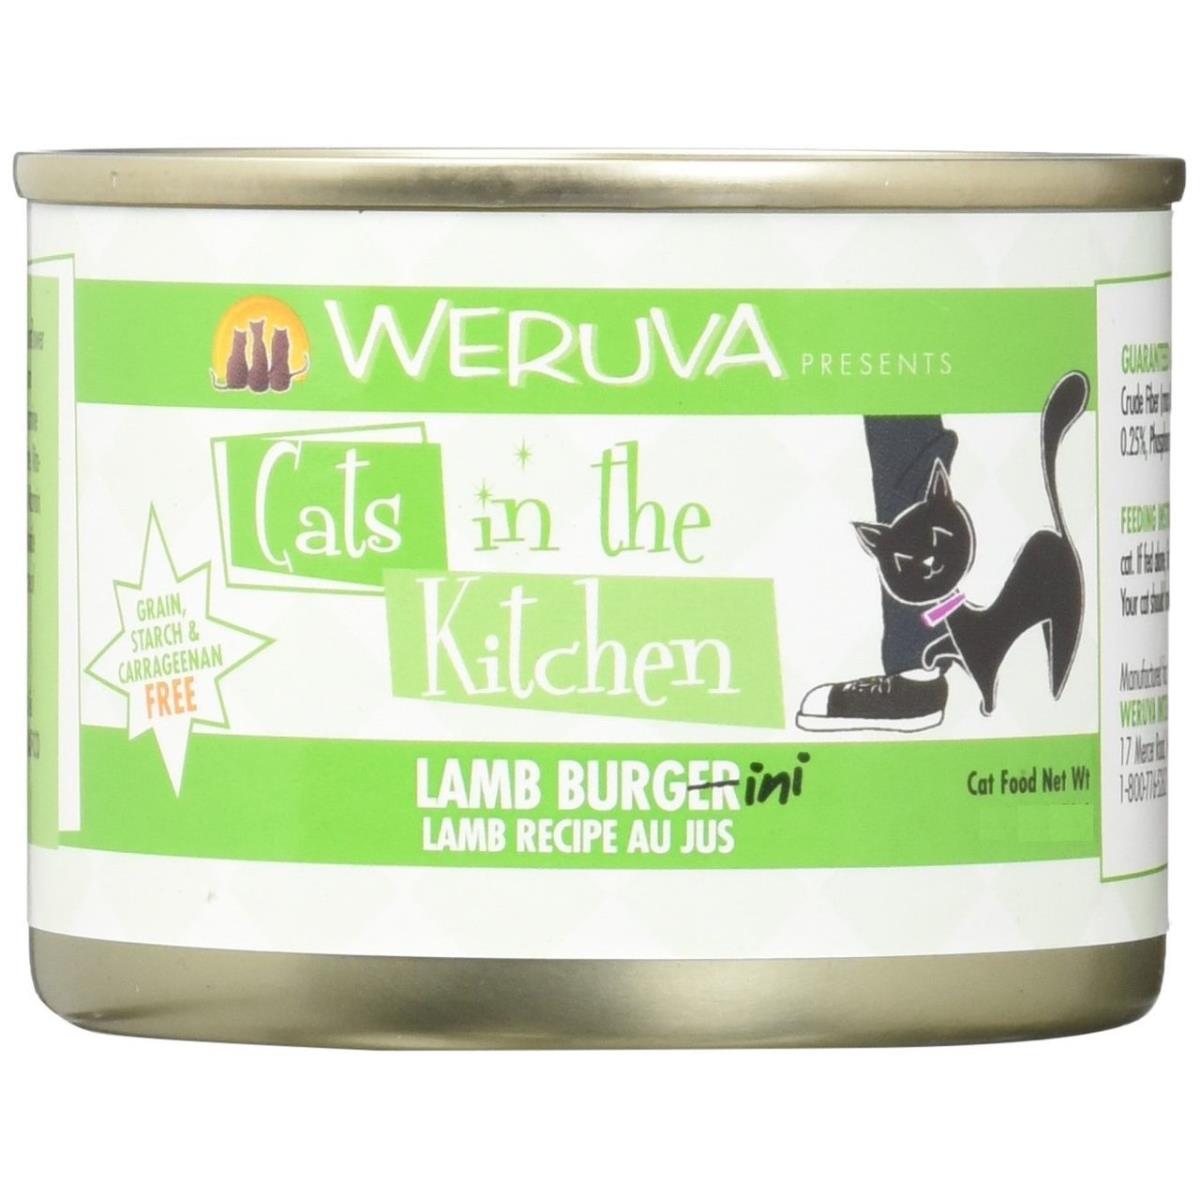 Wu00169 10 Oz The Kitchen Lamb Burgini Cat Food - Case Of 12